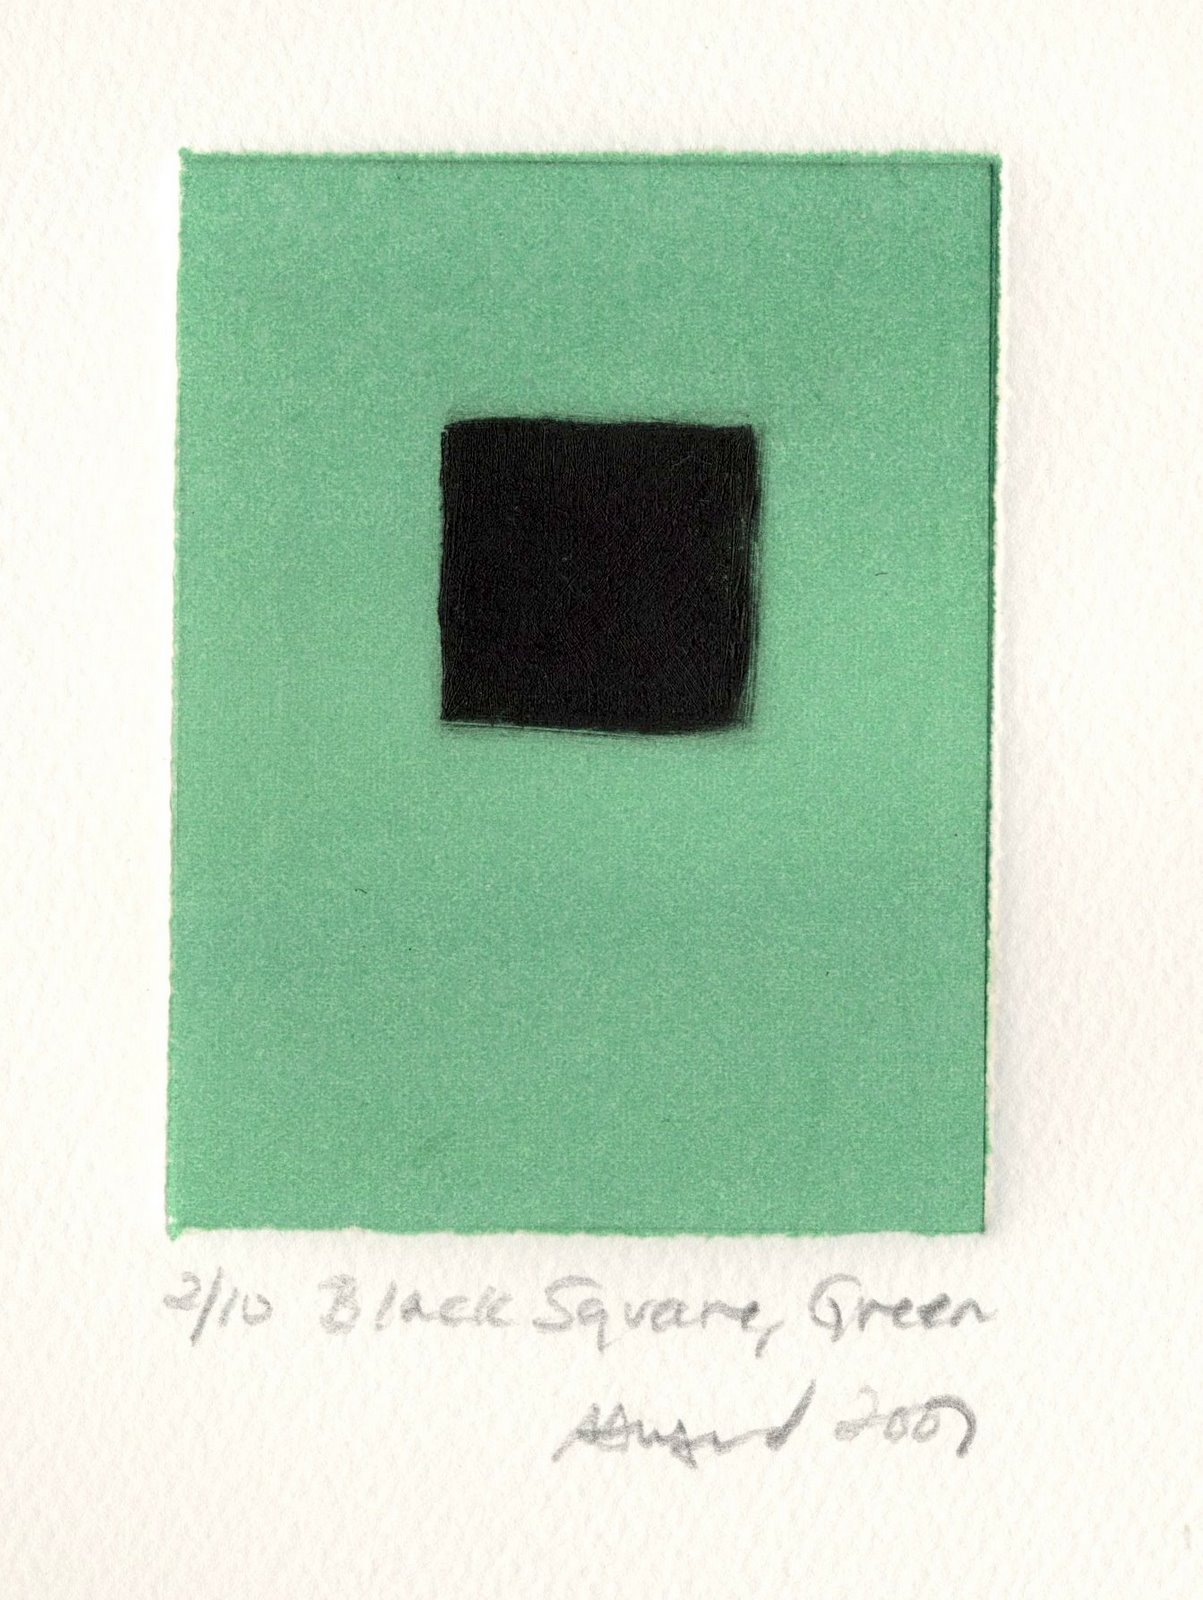 [Black+Square,+Green.jpg]